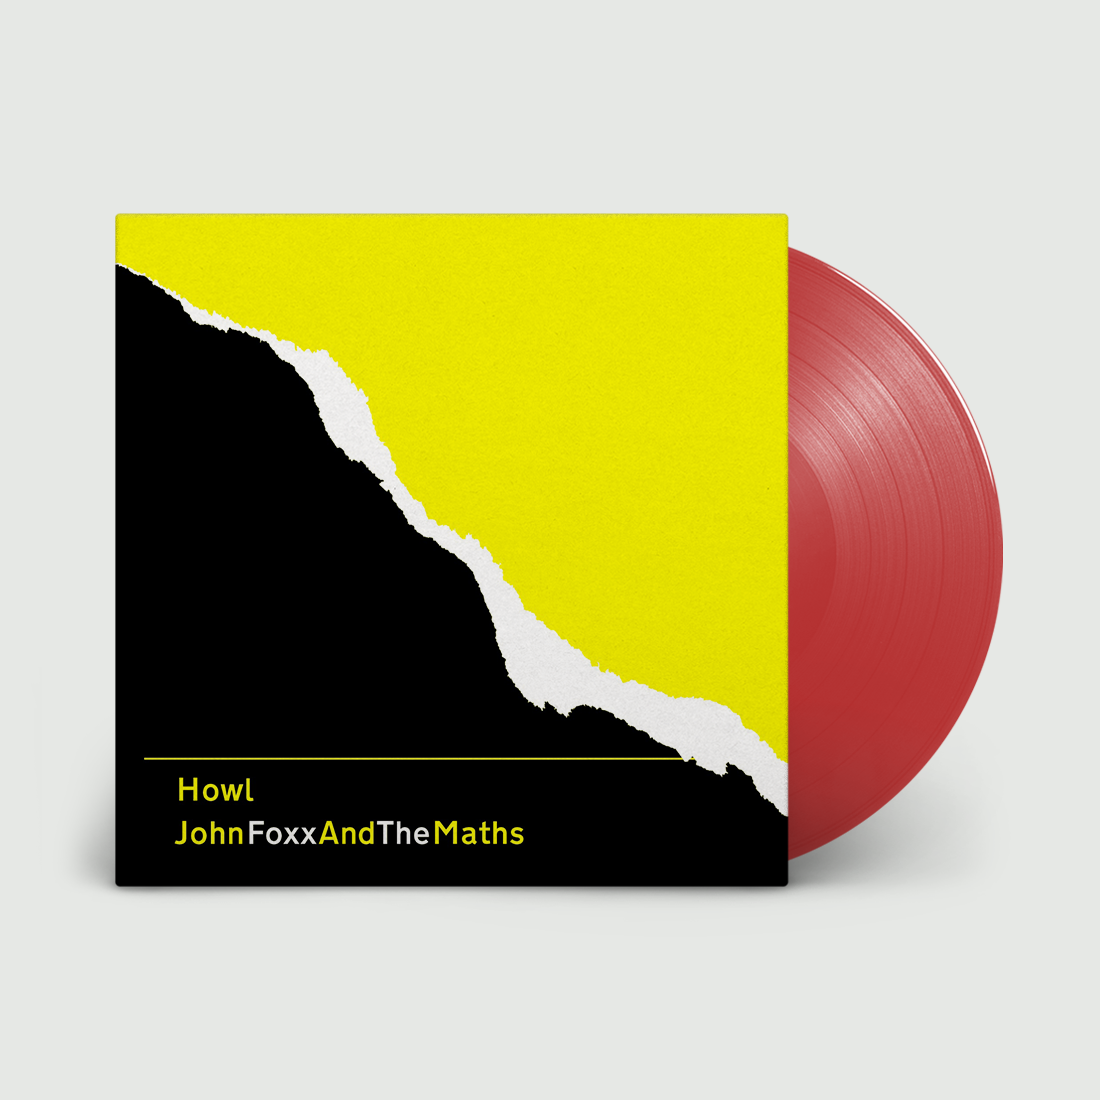 JOHN FOXX AND THE MATHS - Howl - LP - Limited Red Vinyl